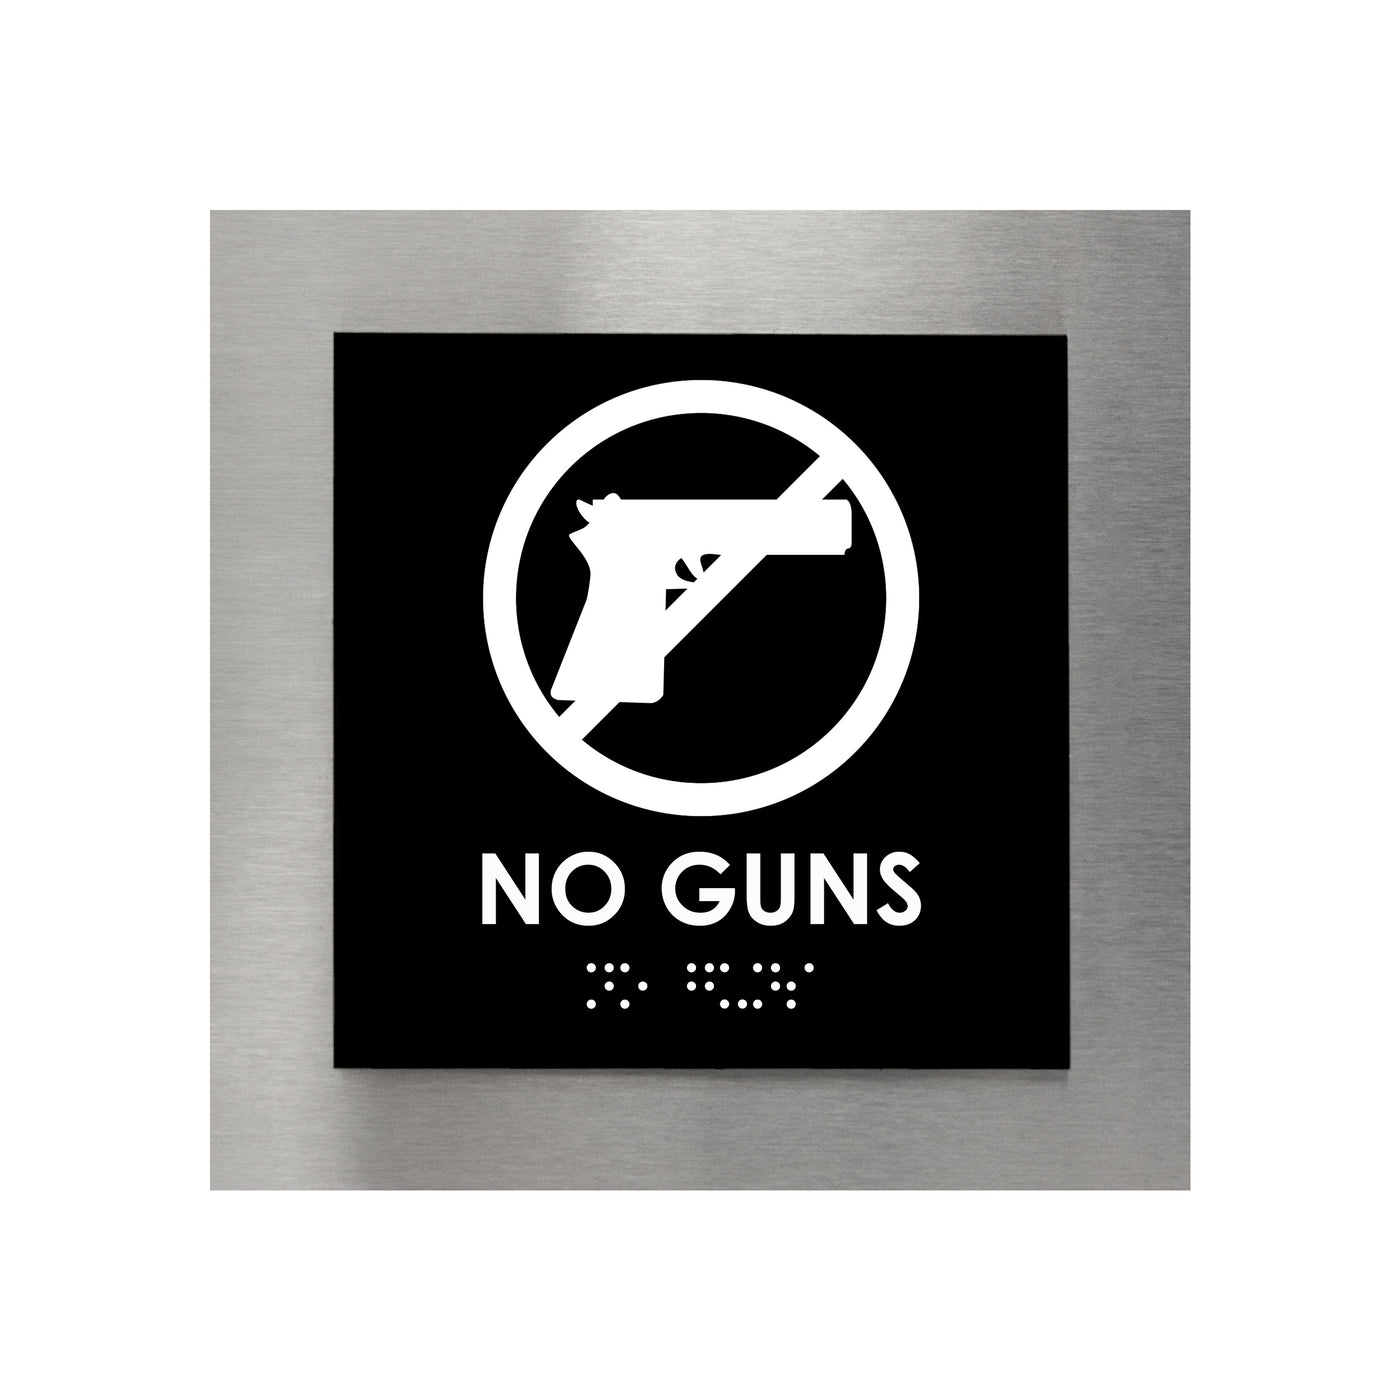 Door Signs - Steel No Guns Sign "Modern" Design